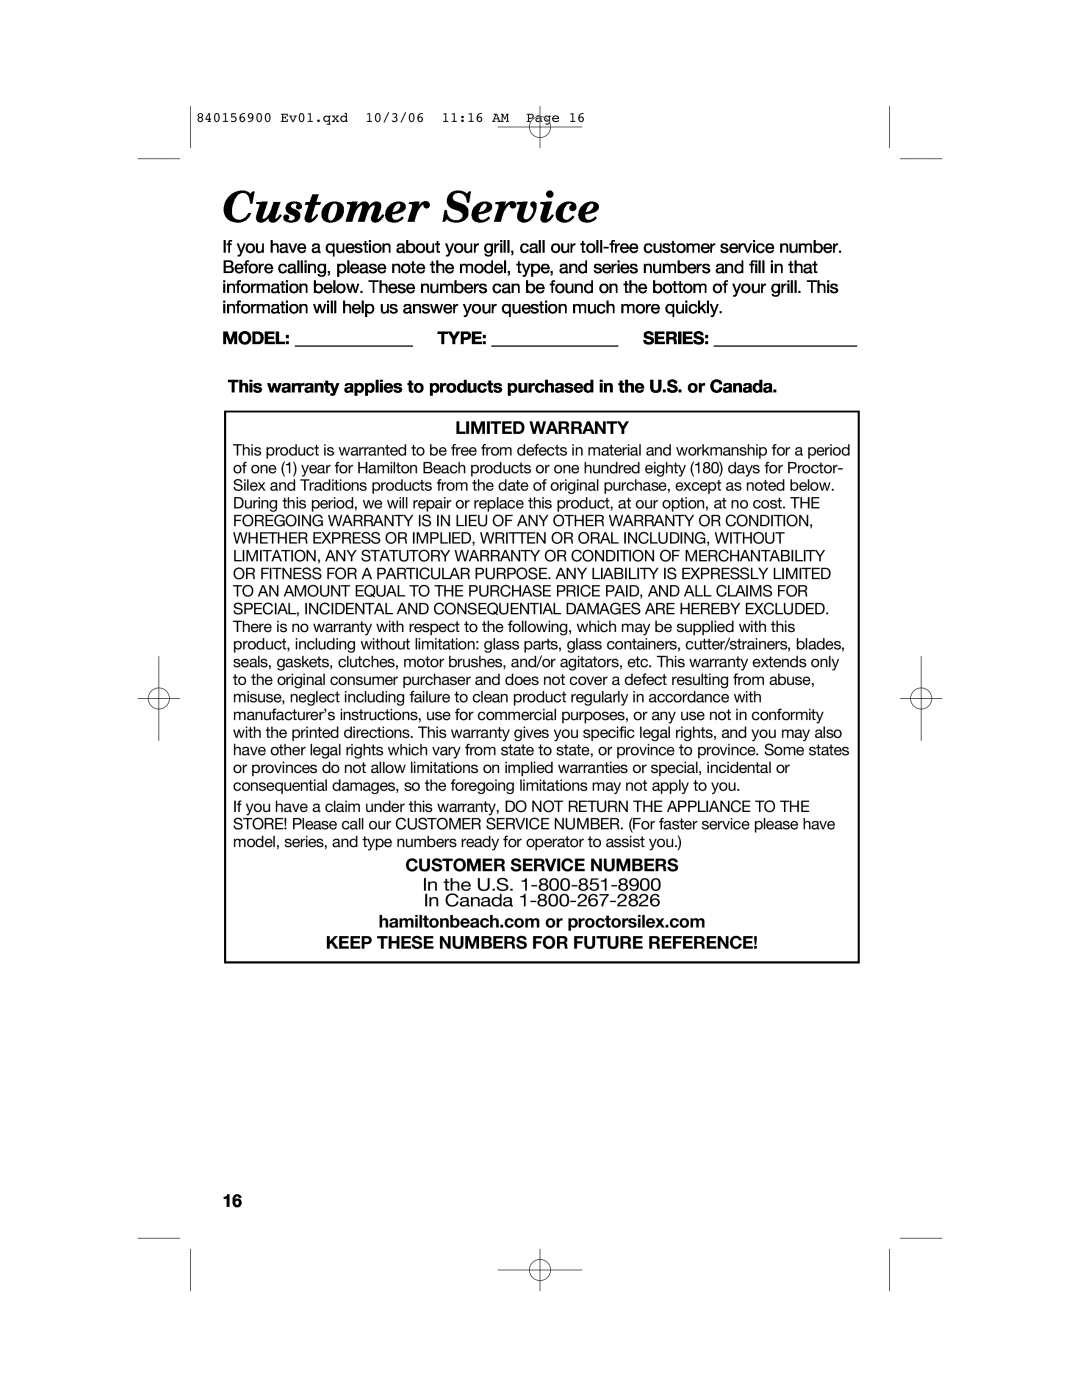 Hamilton Beach 25285 manual Model Type Series, Limited Warranty, Customer Service Numbers 